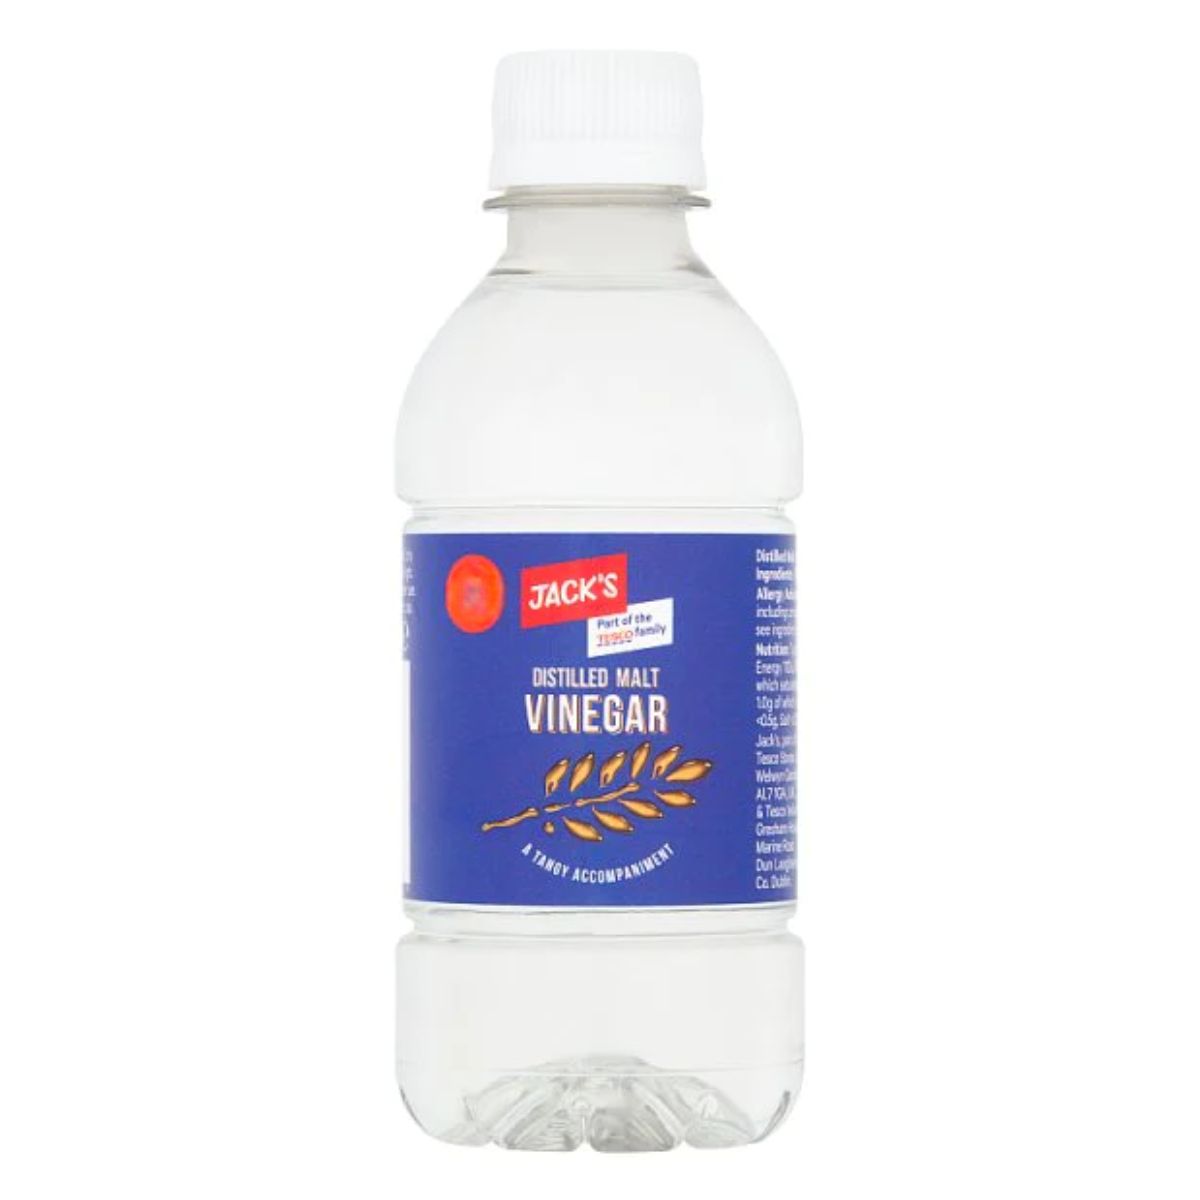 A bottle of Jacks - Distilled Vinegar - 284ml with a label on it.